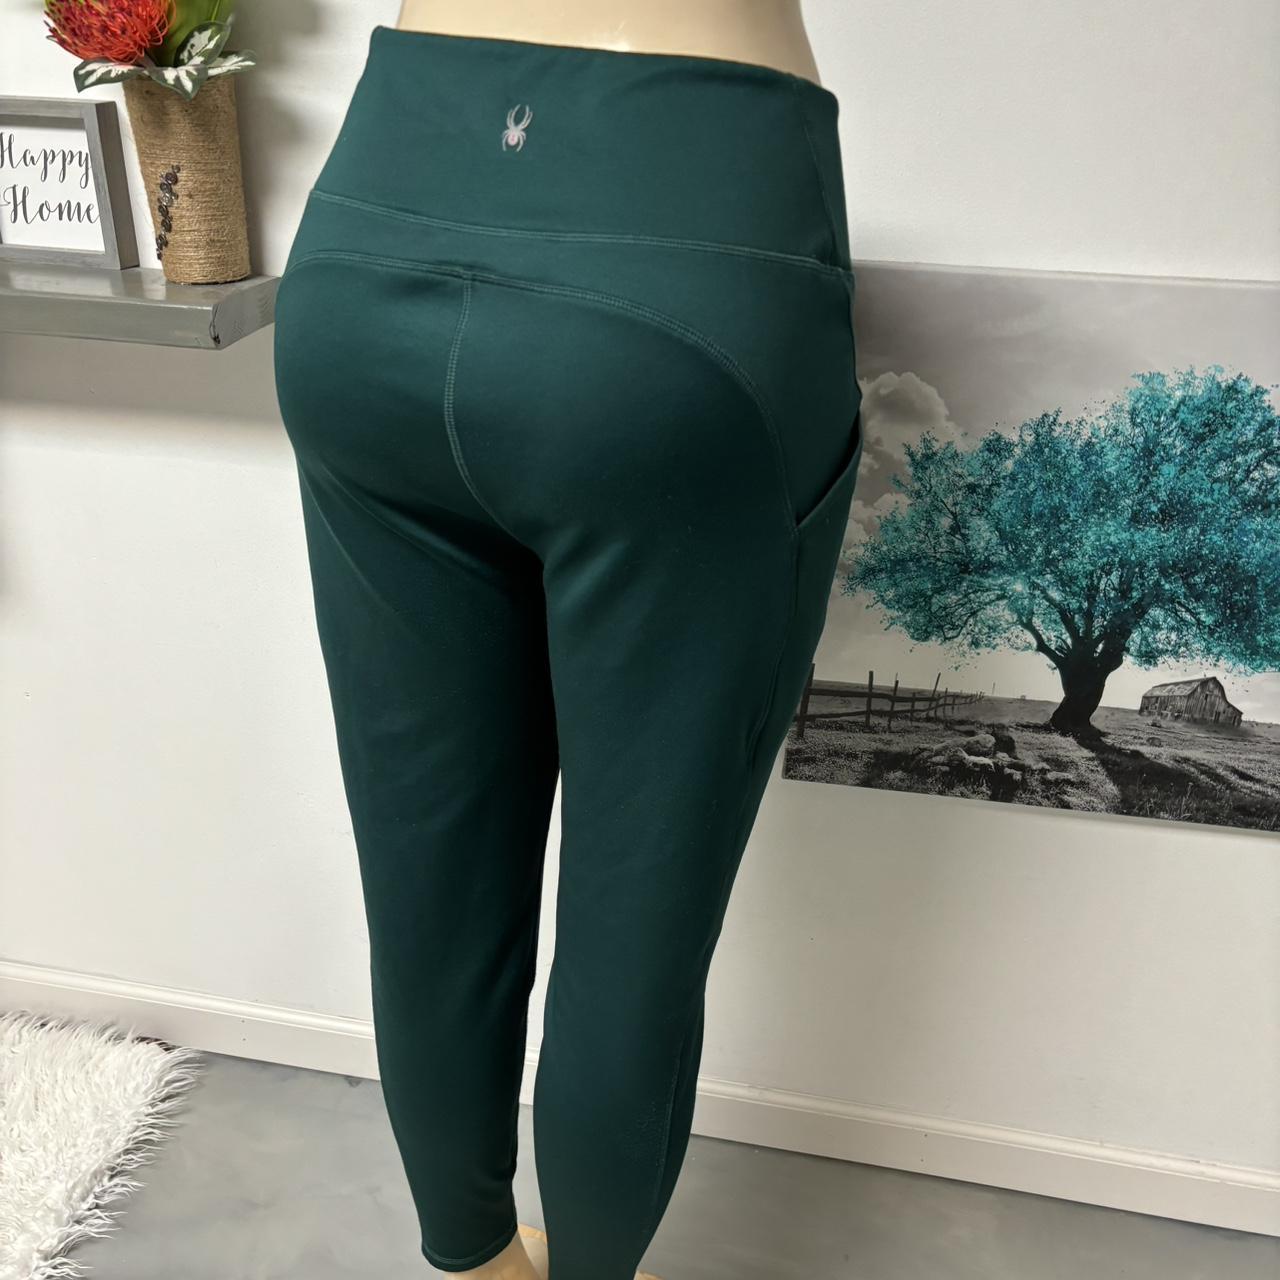 Spyder active women’s leggings size xl , Great condition